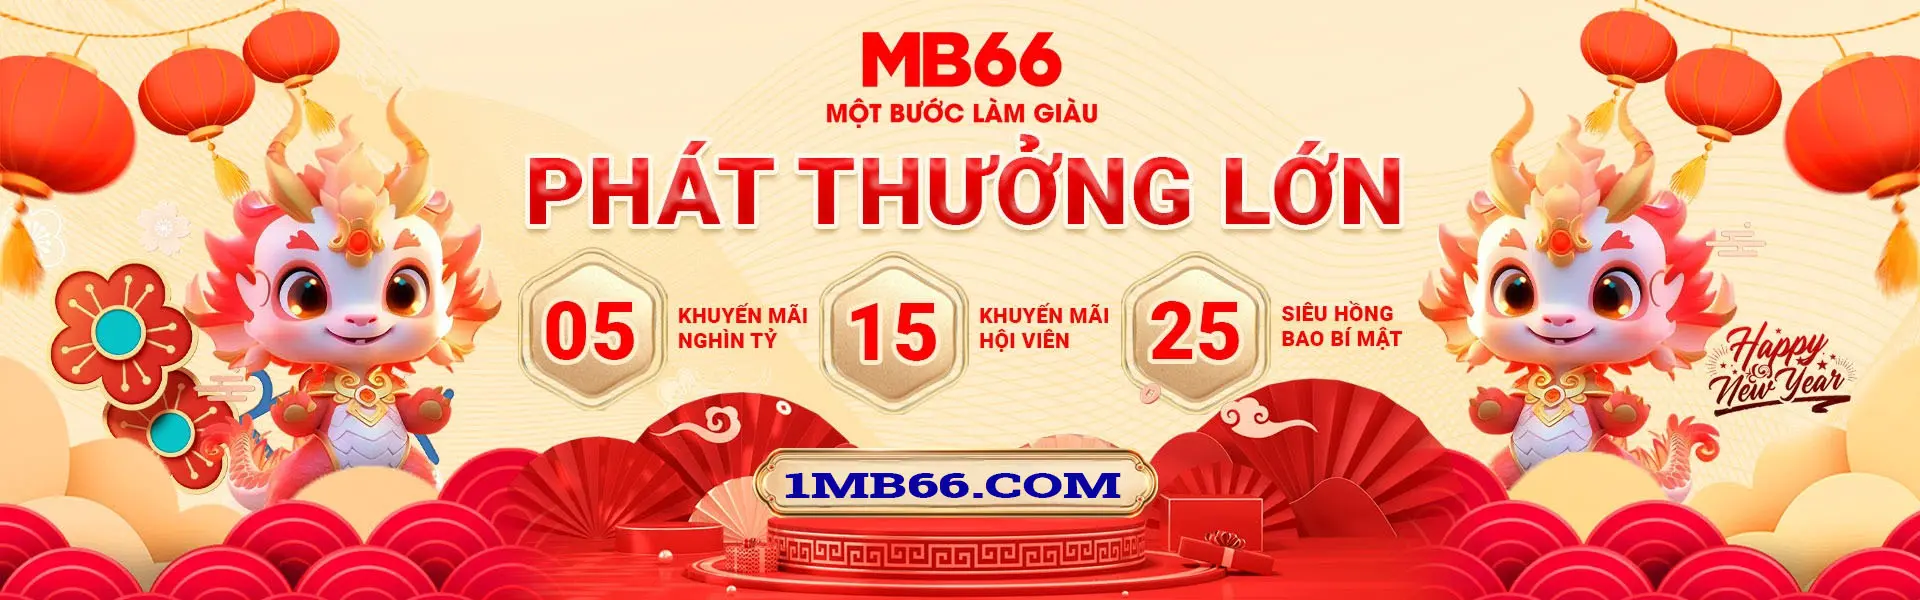 mb66-phat-thuong-lon